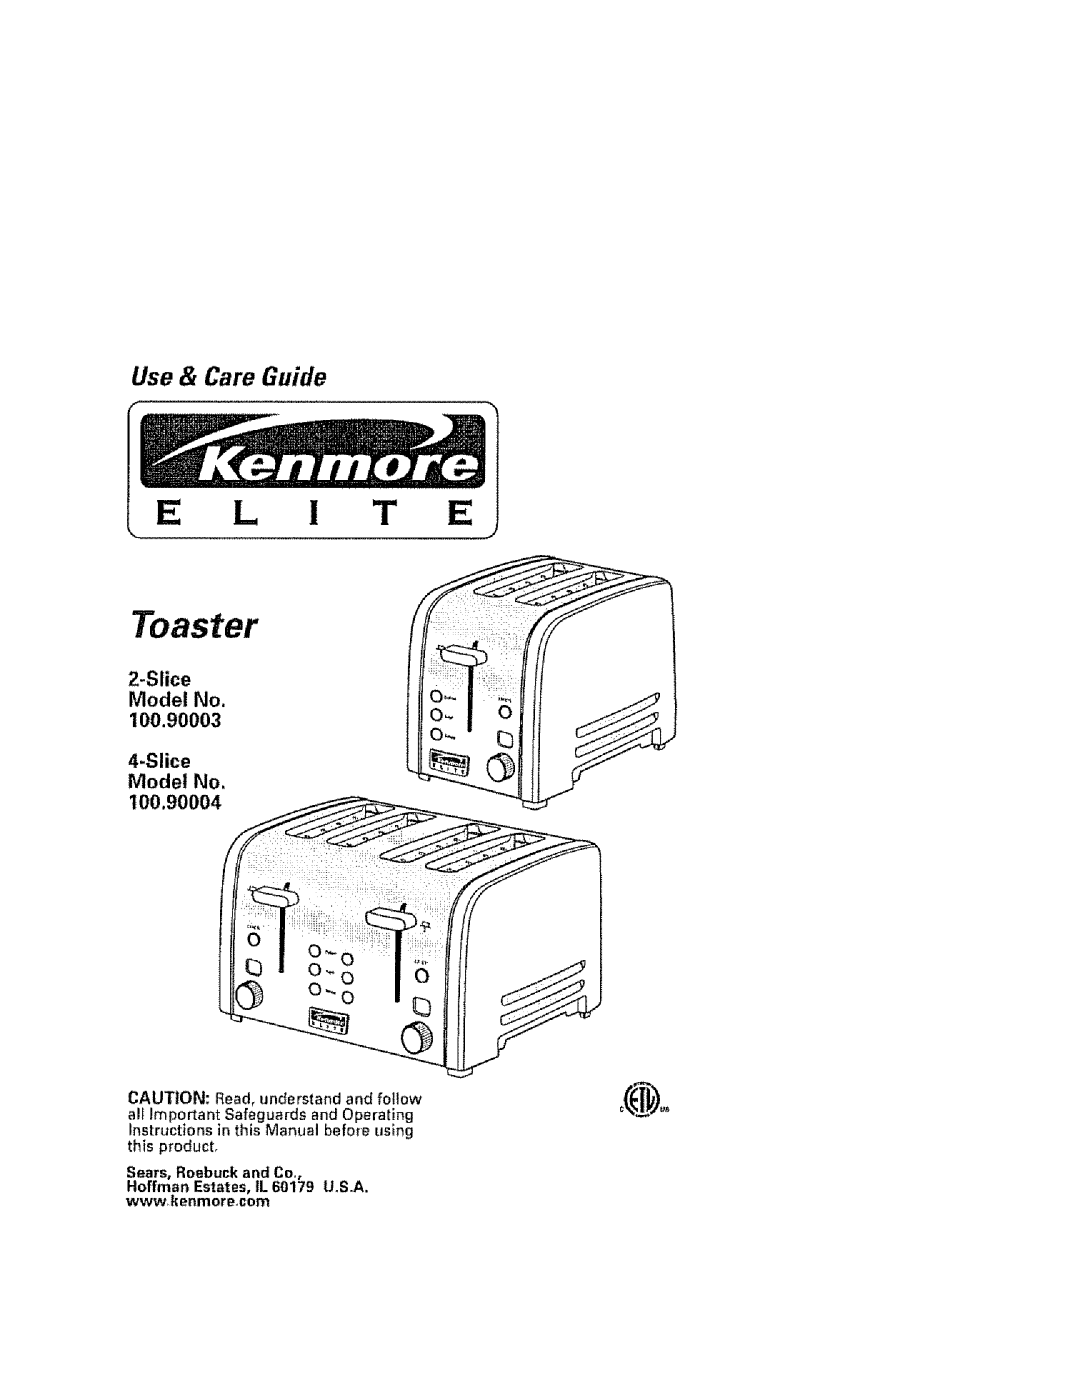 Kenmore 100.90003 manual E L i T E, Toaster, Use & Care Guide, SliceModel No 